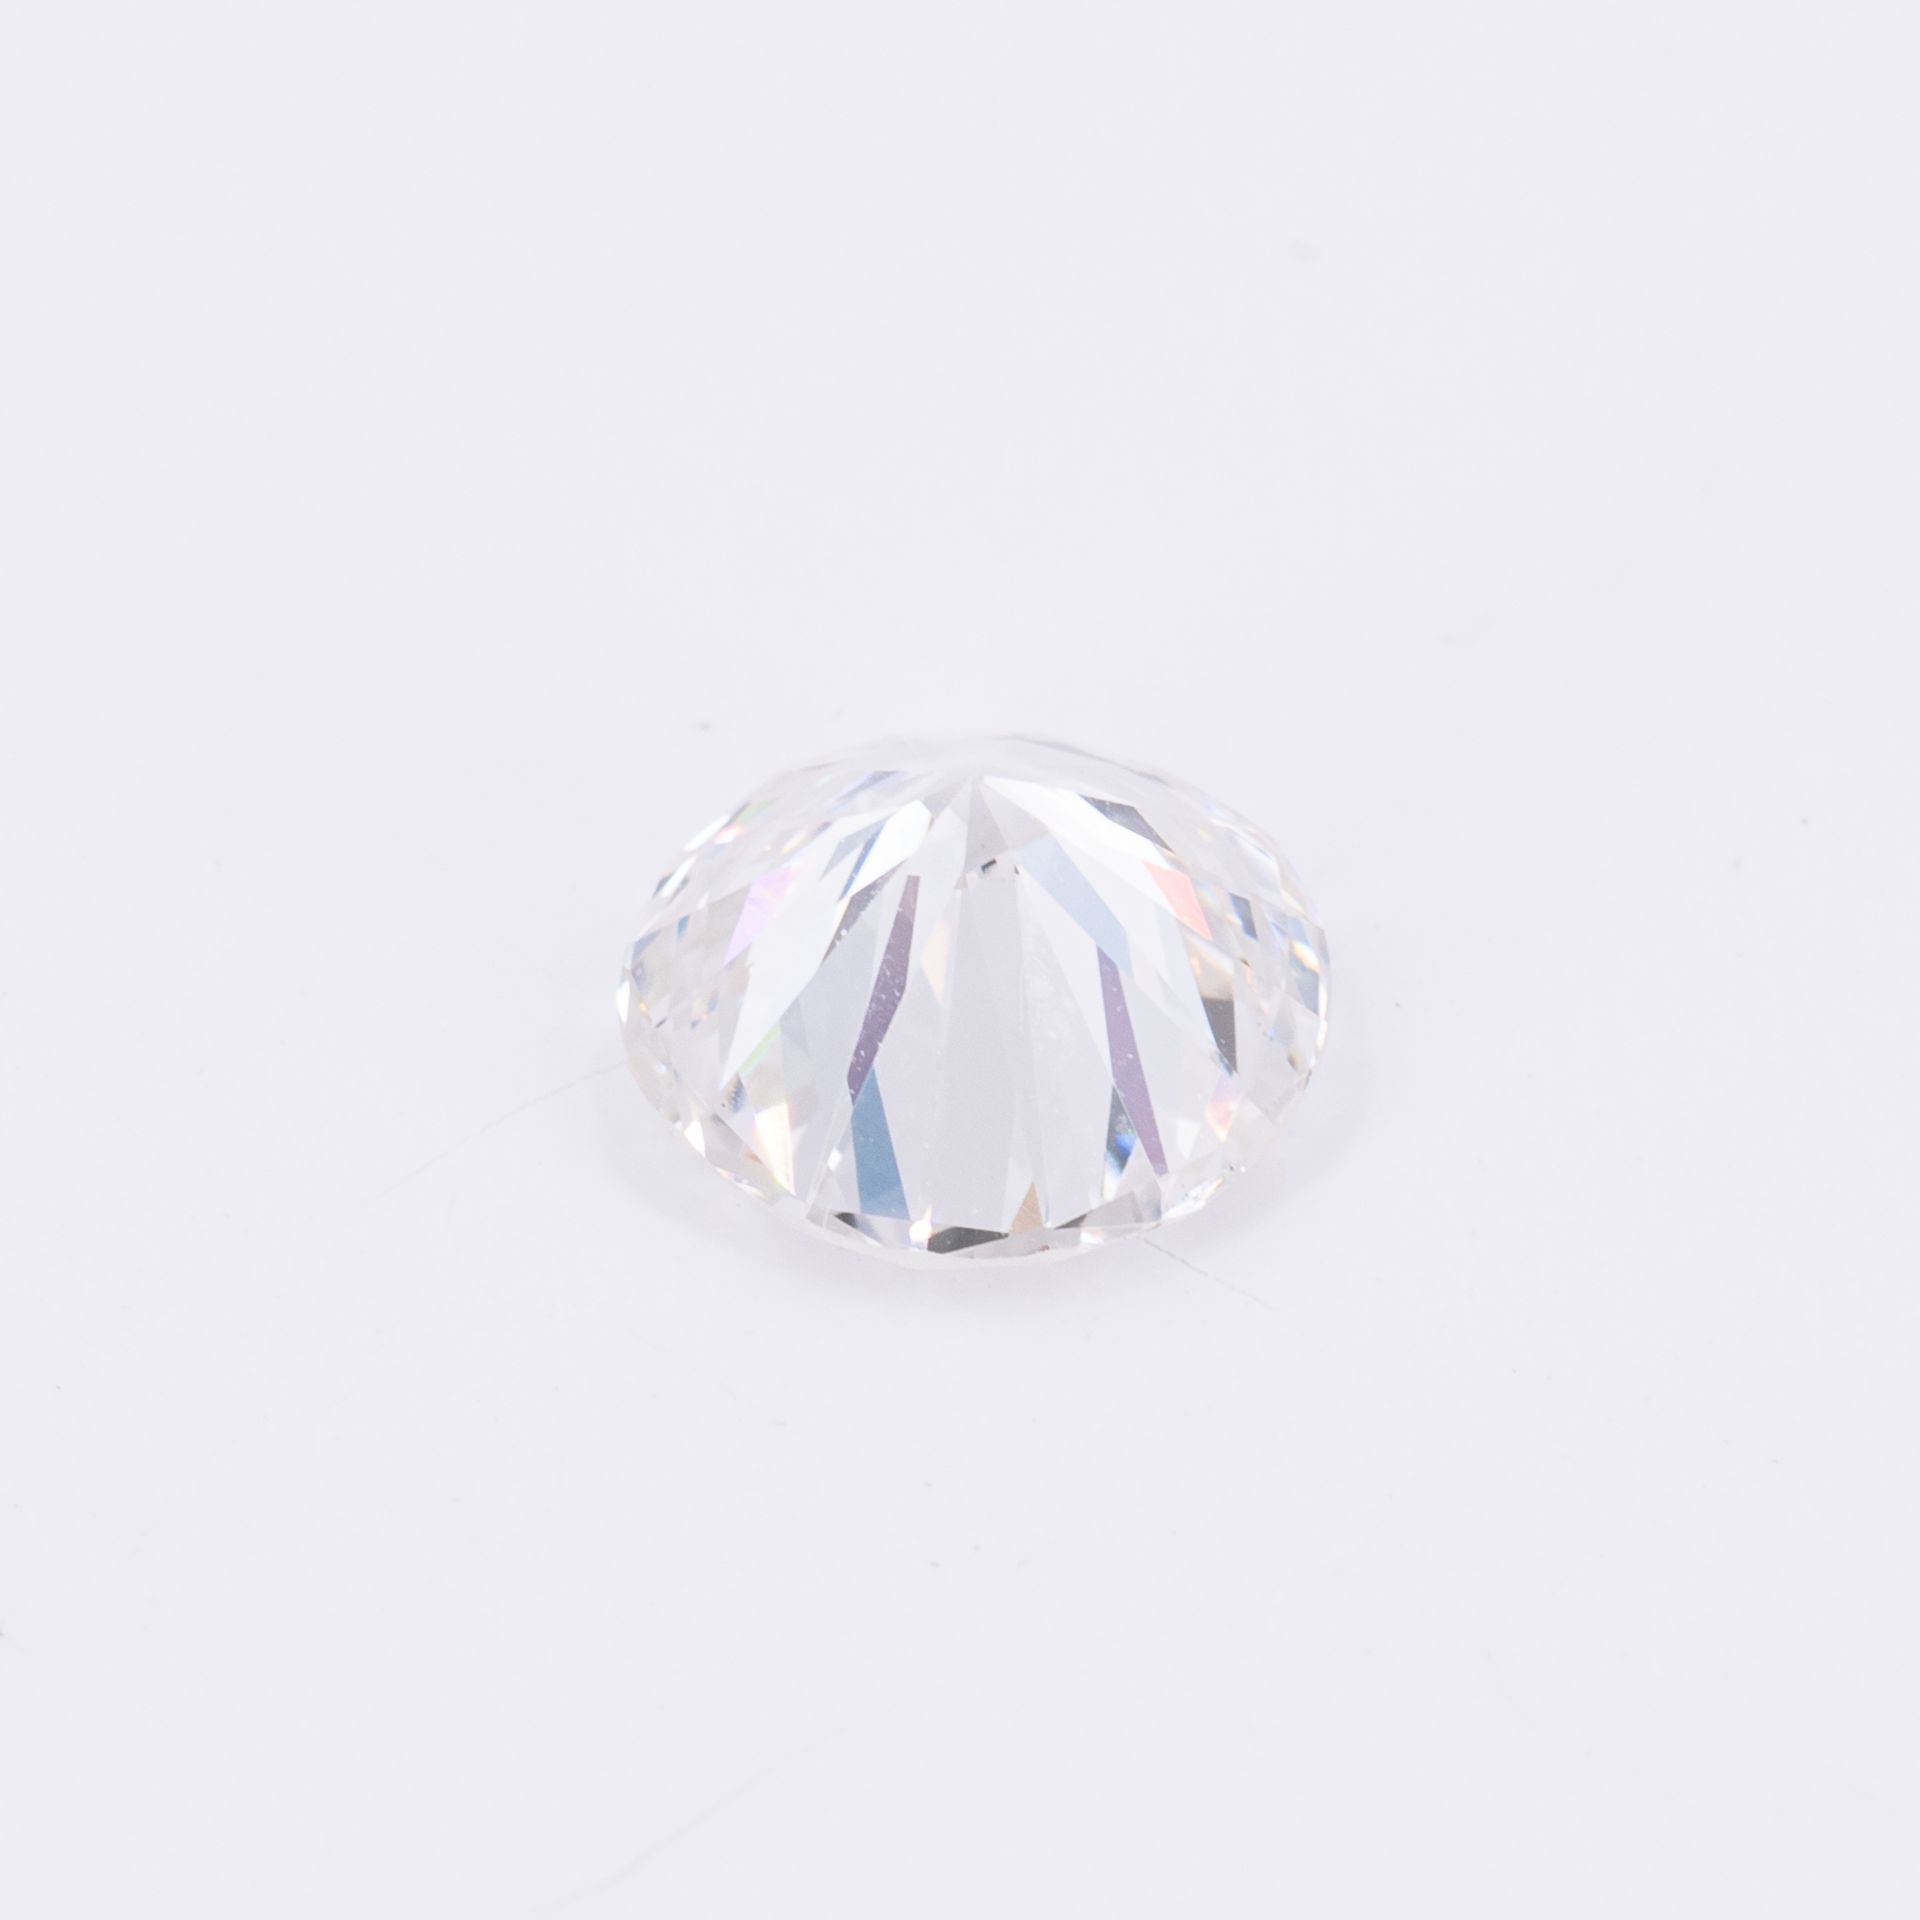 Loose Brilliant-Cut Diamond - Image 4 of 4